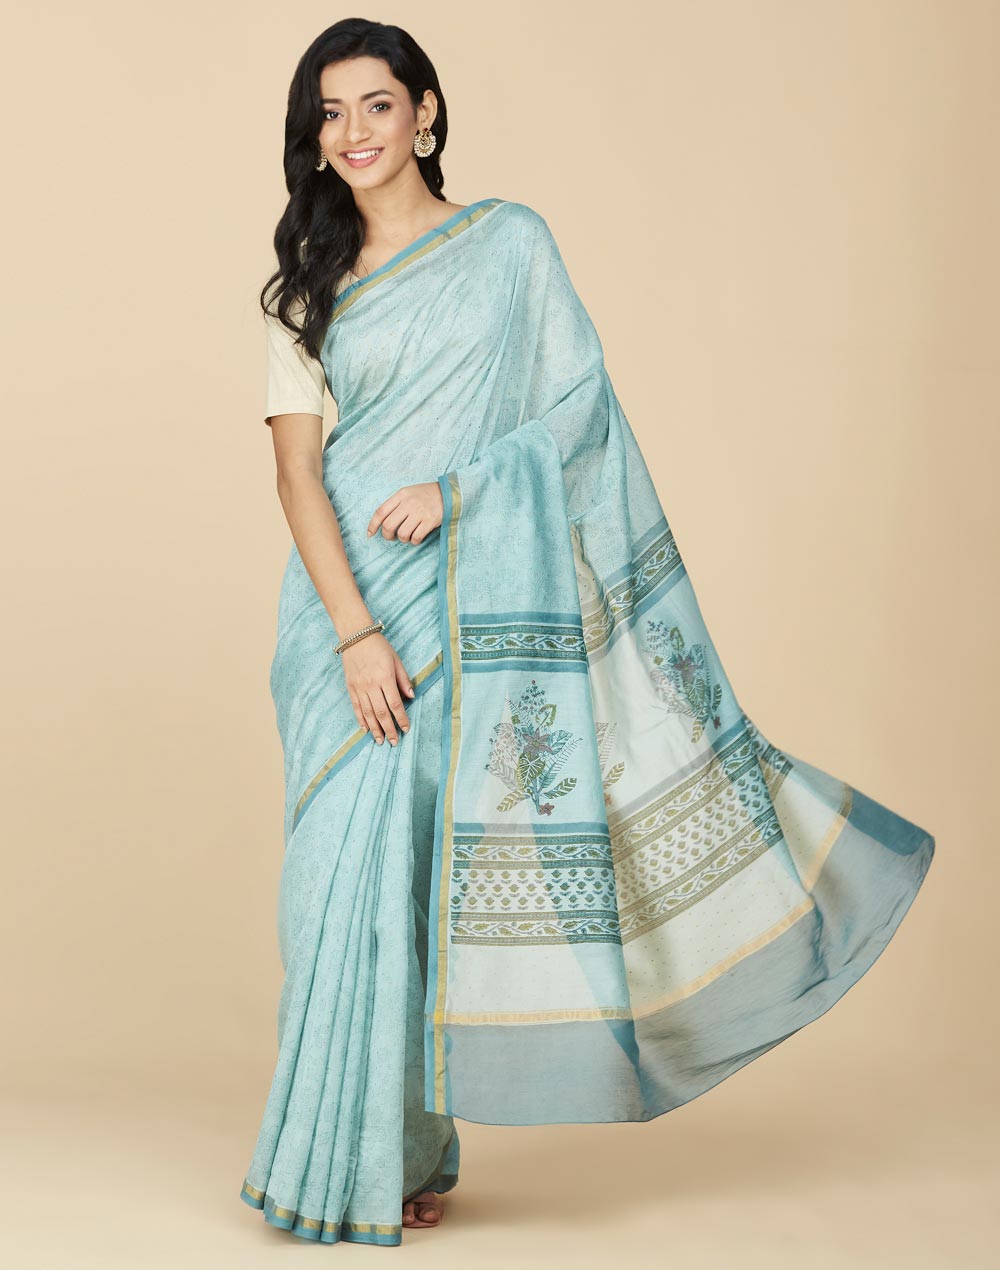 Buy Saris for Women, Cotton Sarees for Women Online at Fabindia